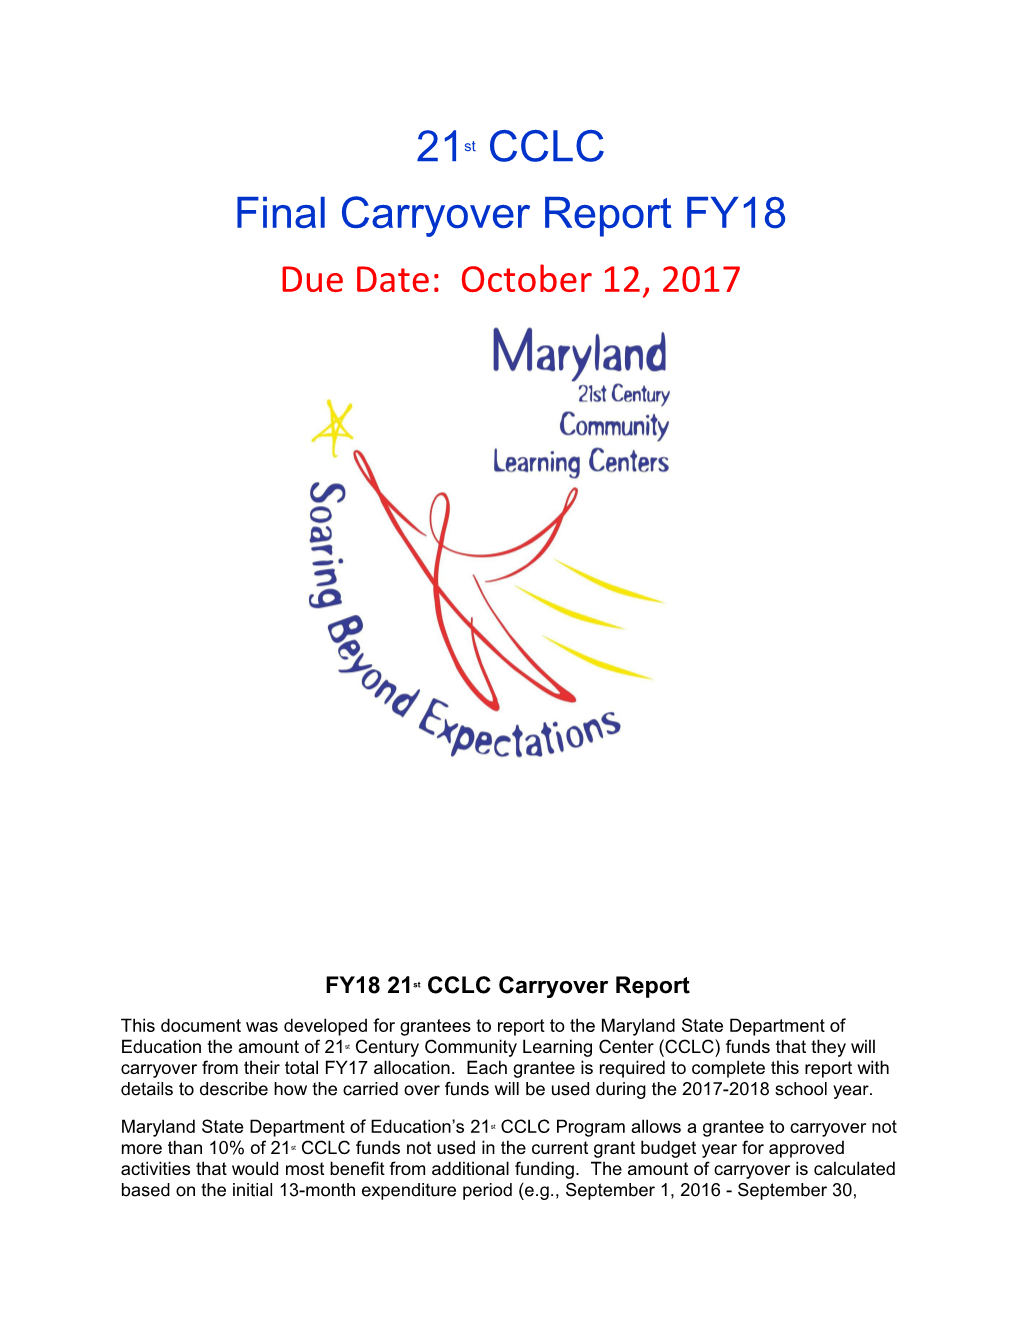 FY18 21St CCLC Carryover Report